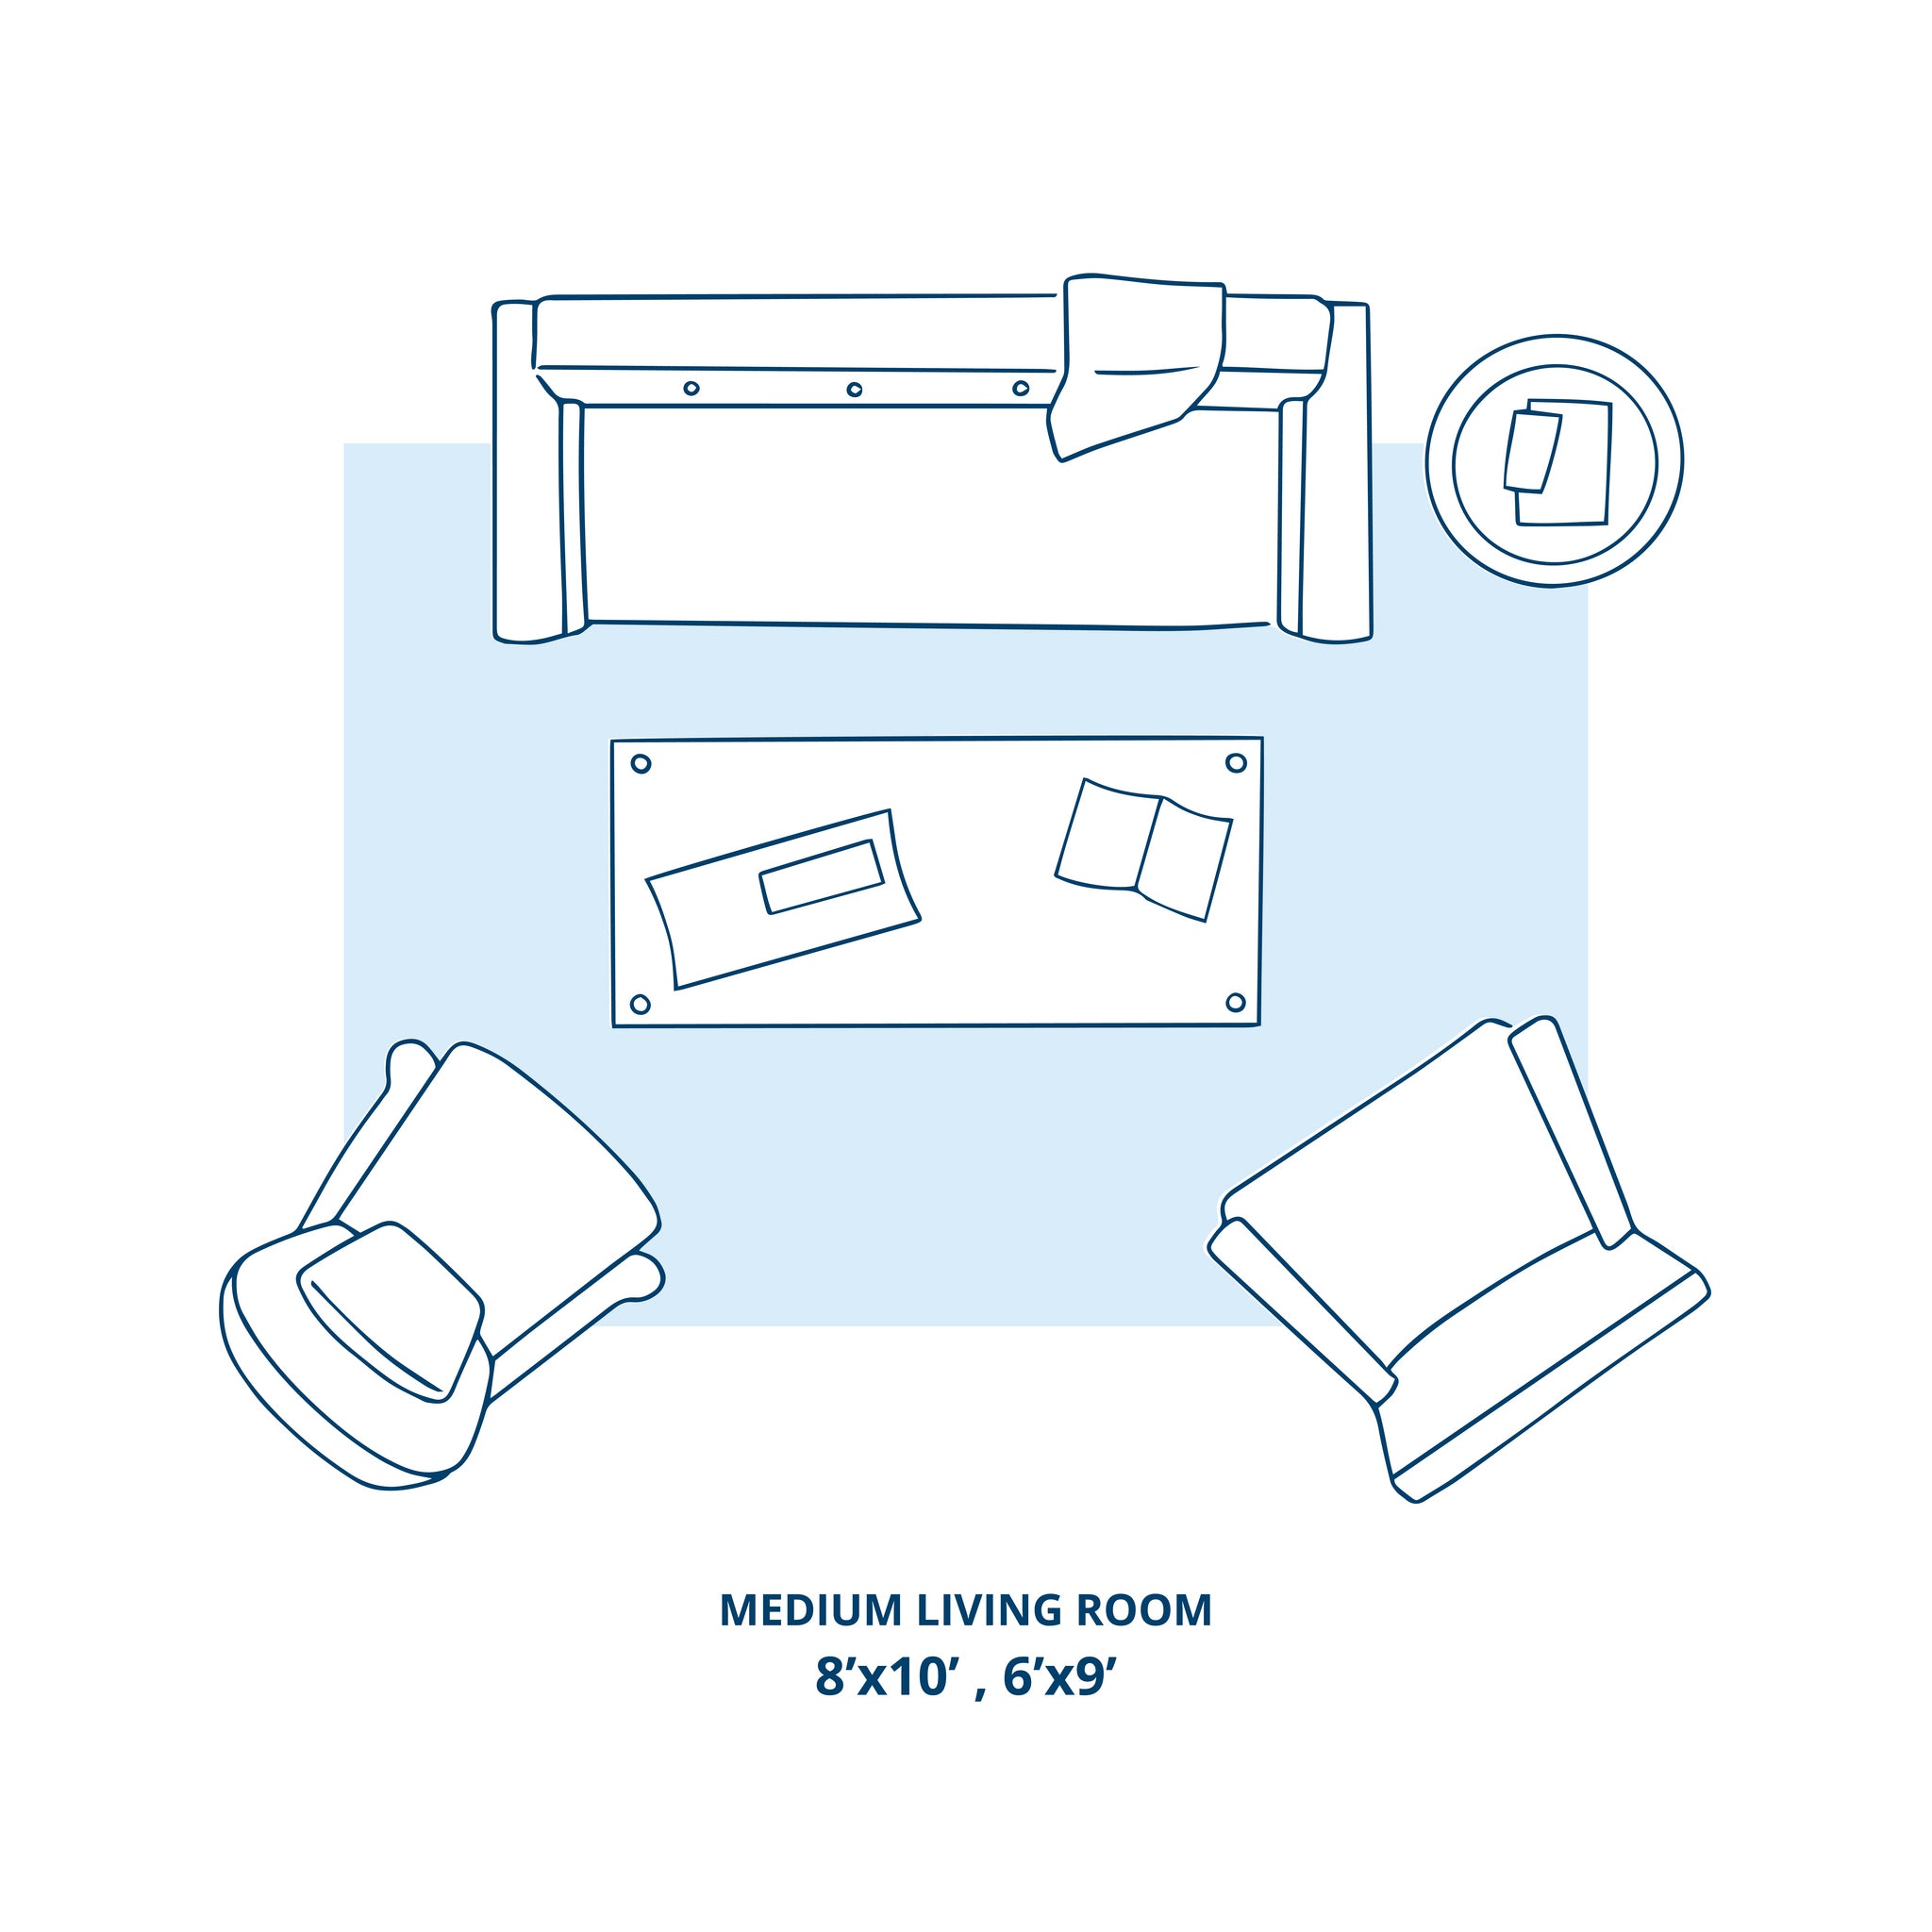 Medium Living Room Floor Plan Design Mockup with Area Rug